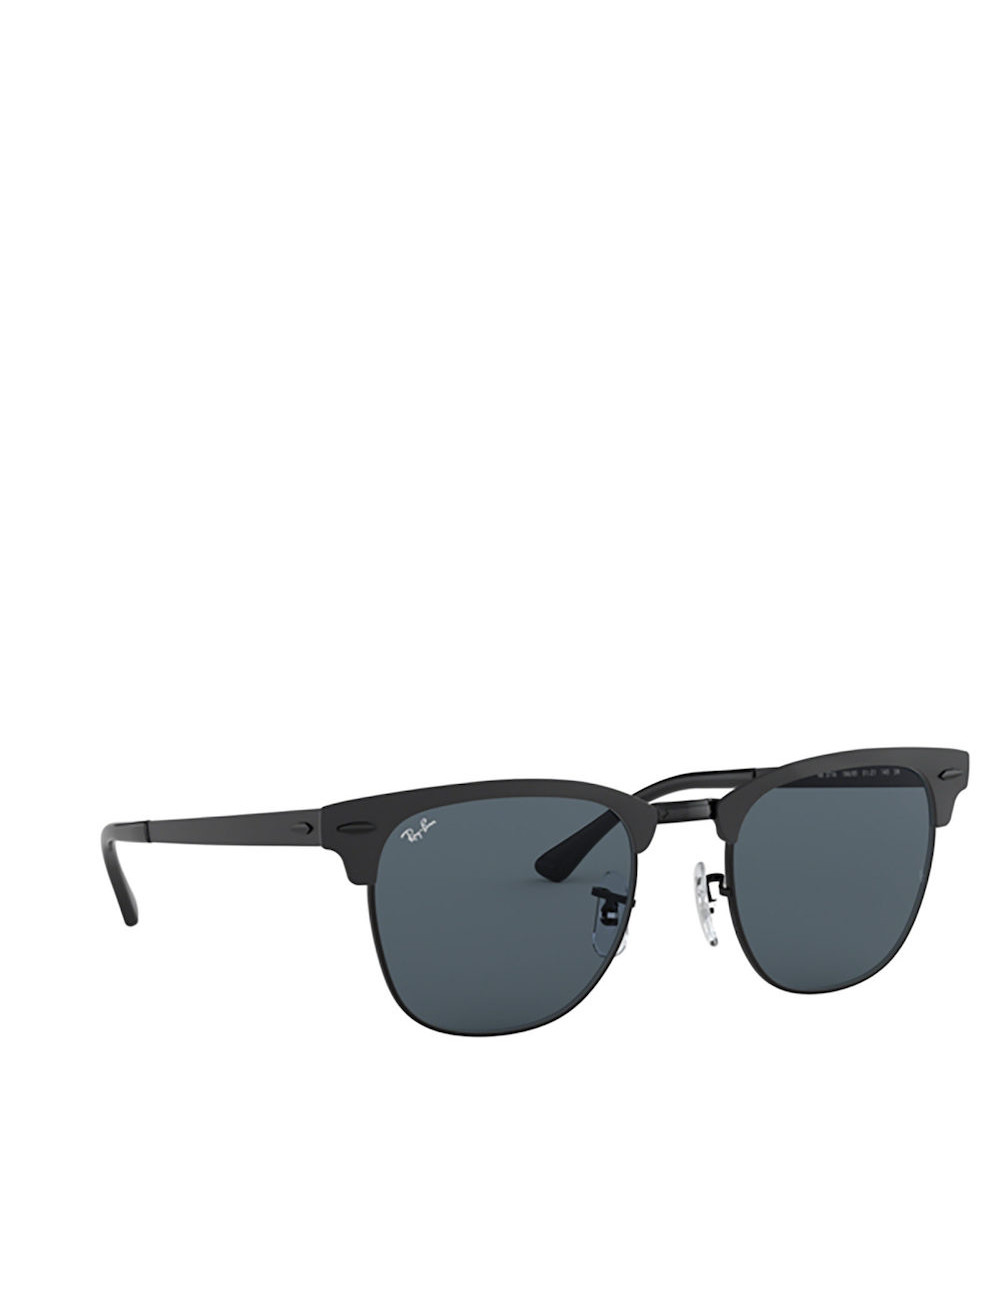 Ray Ban Clubmaster Metal RB3716 186/R5 sunglasses 